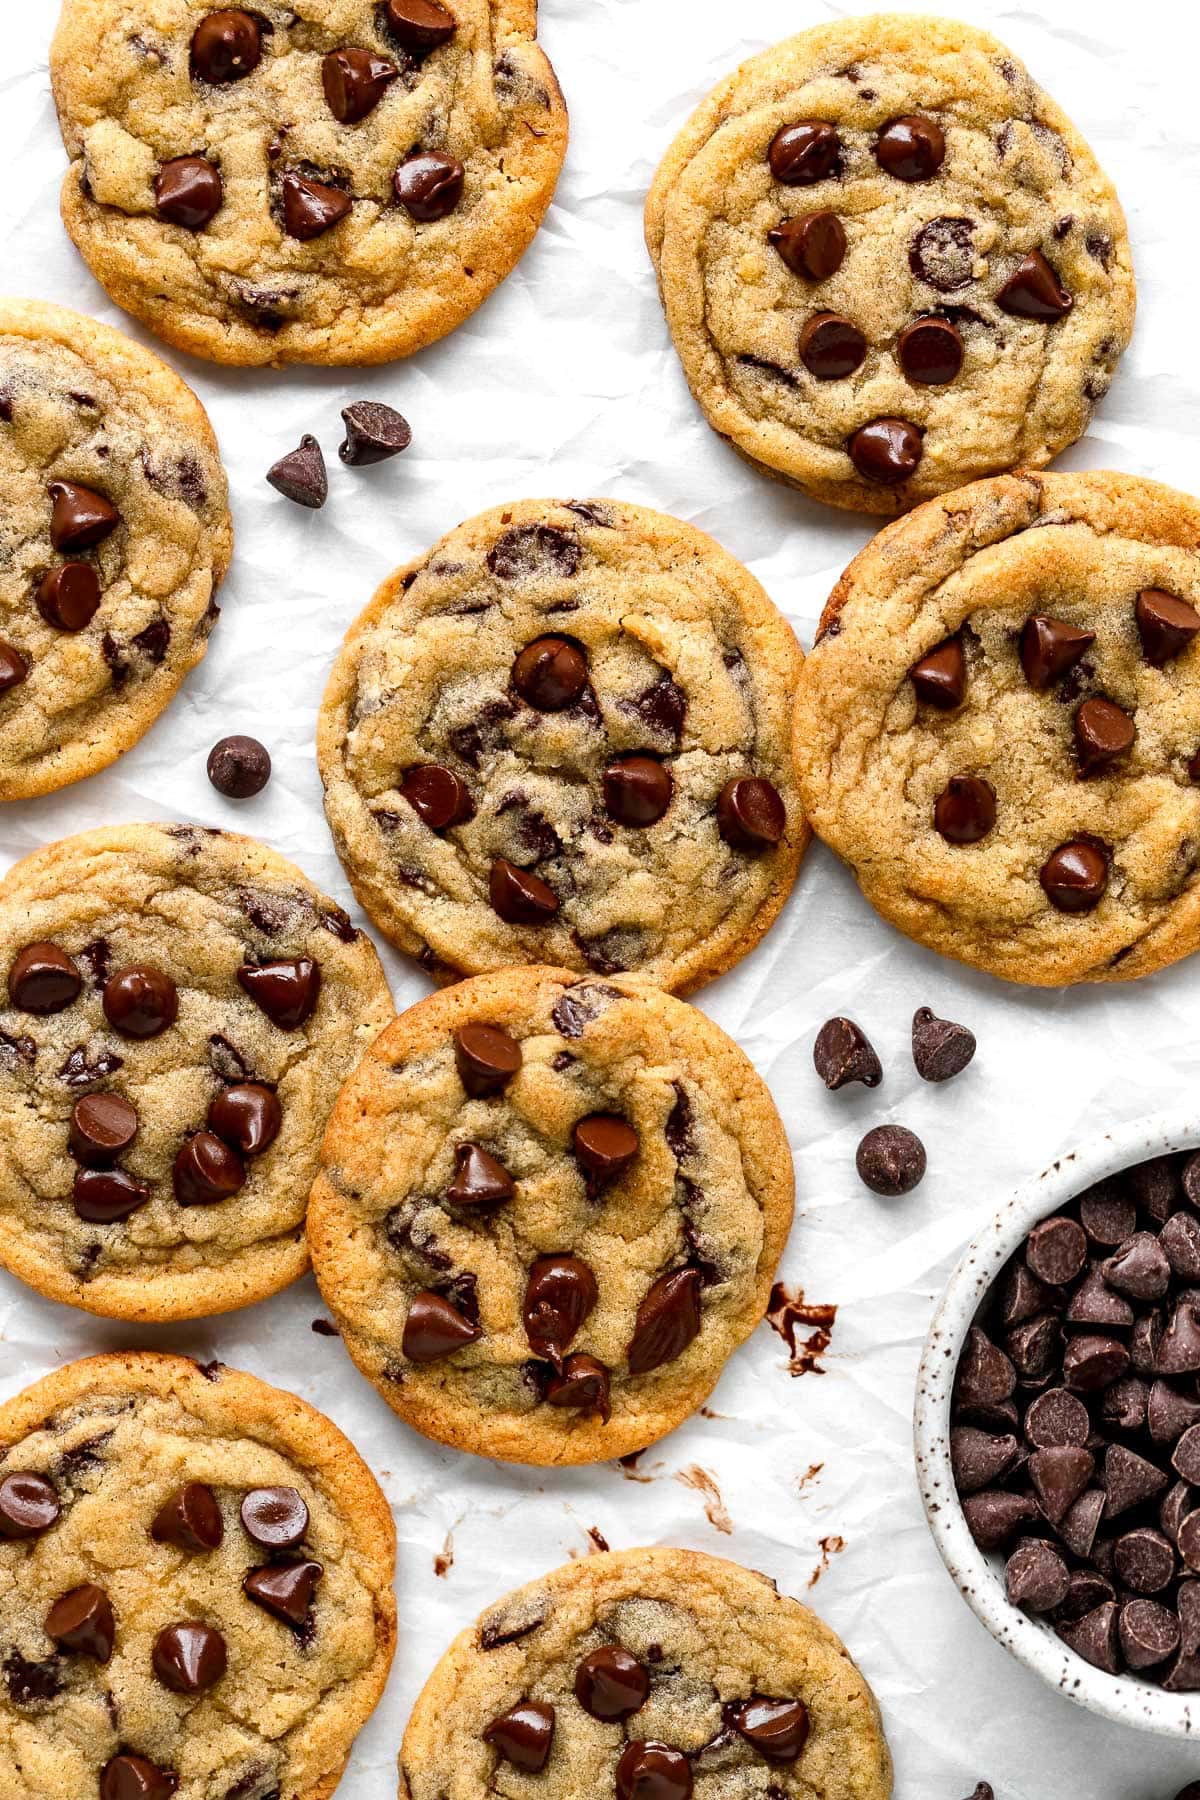 https://www.twopeasandtheirpod.com/wp-content/uploads/2021/06/Vanilla-Pudding-Chocolate-Chip-Cookies-15.jpg